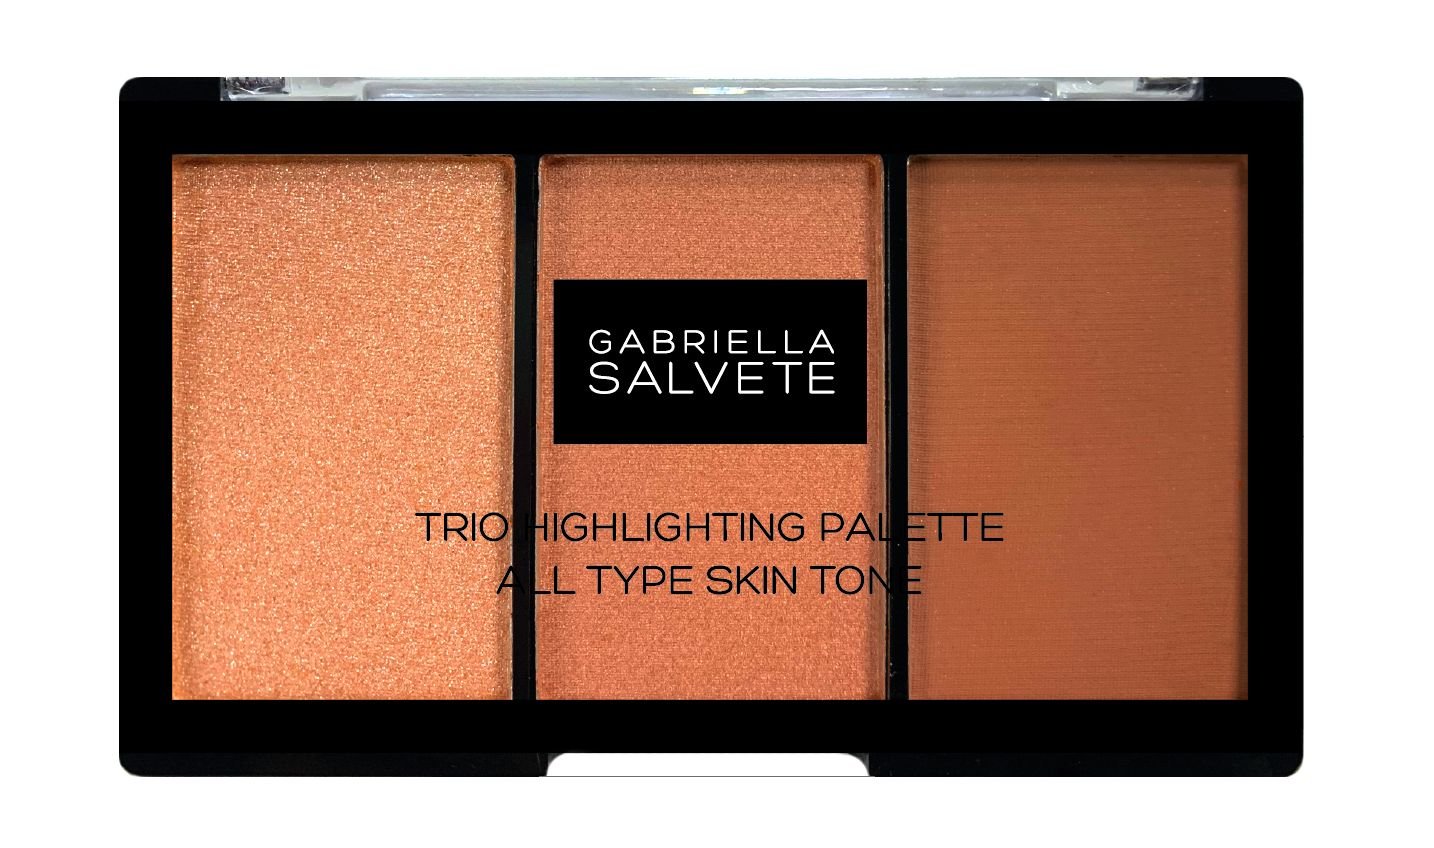 Trio Highlighting Palette - Gabriella Salvete Iluminator